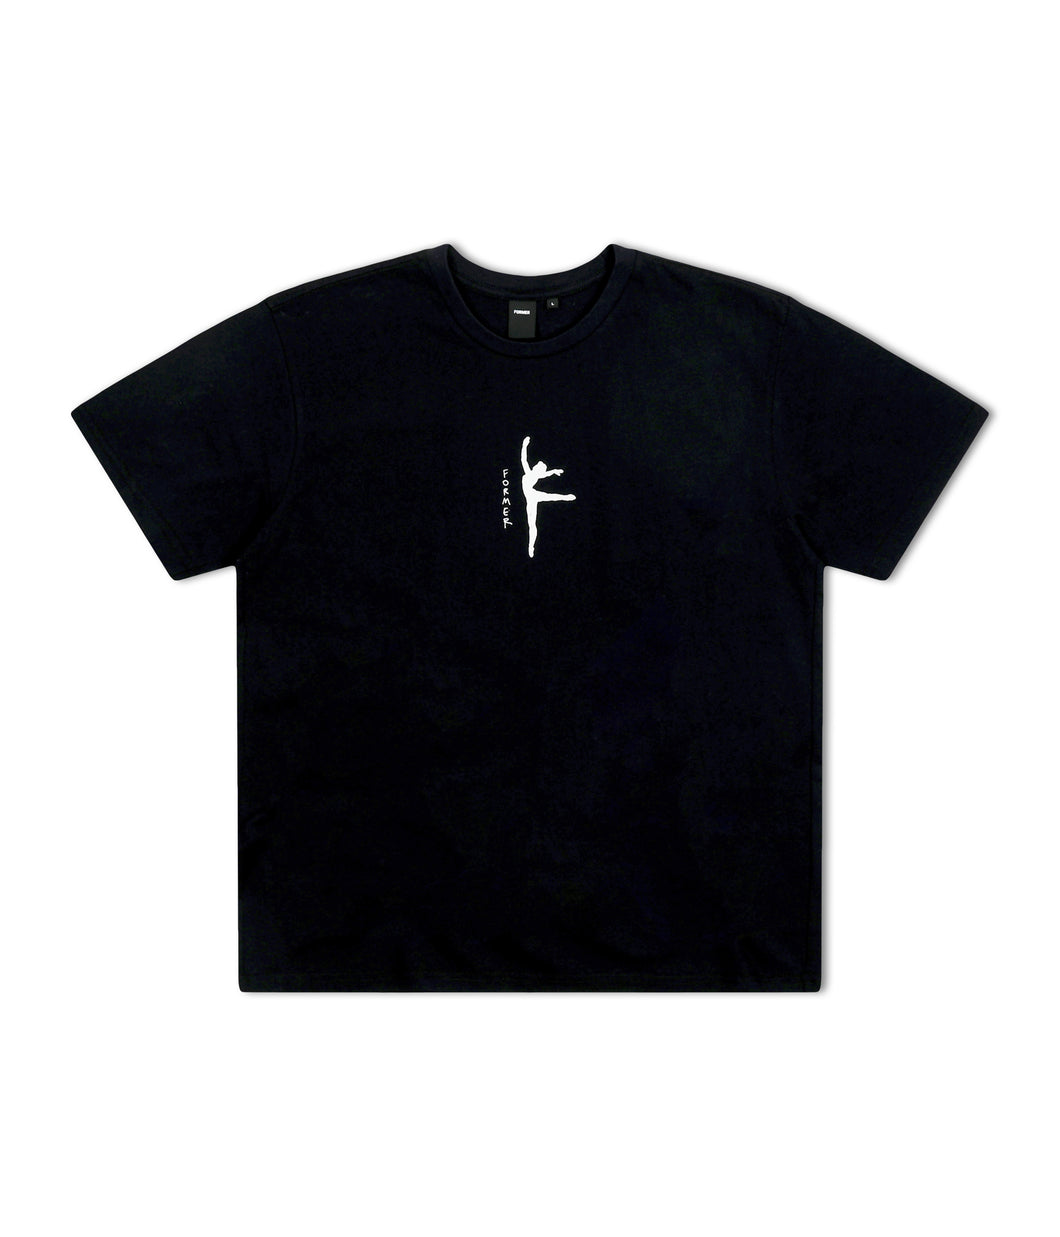 Former - Suspension T-Shirt in Black